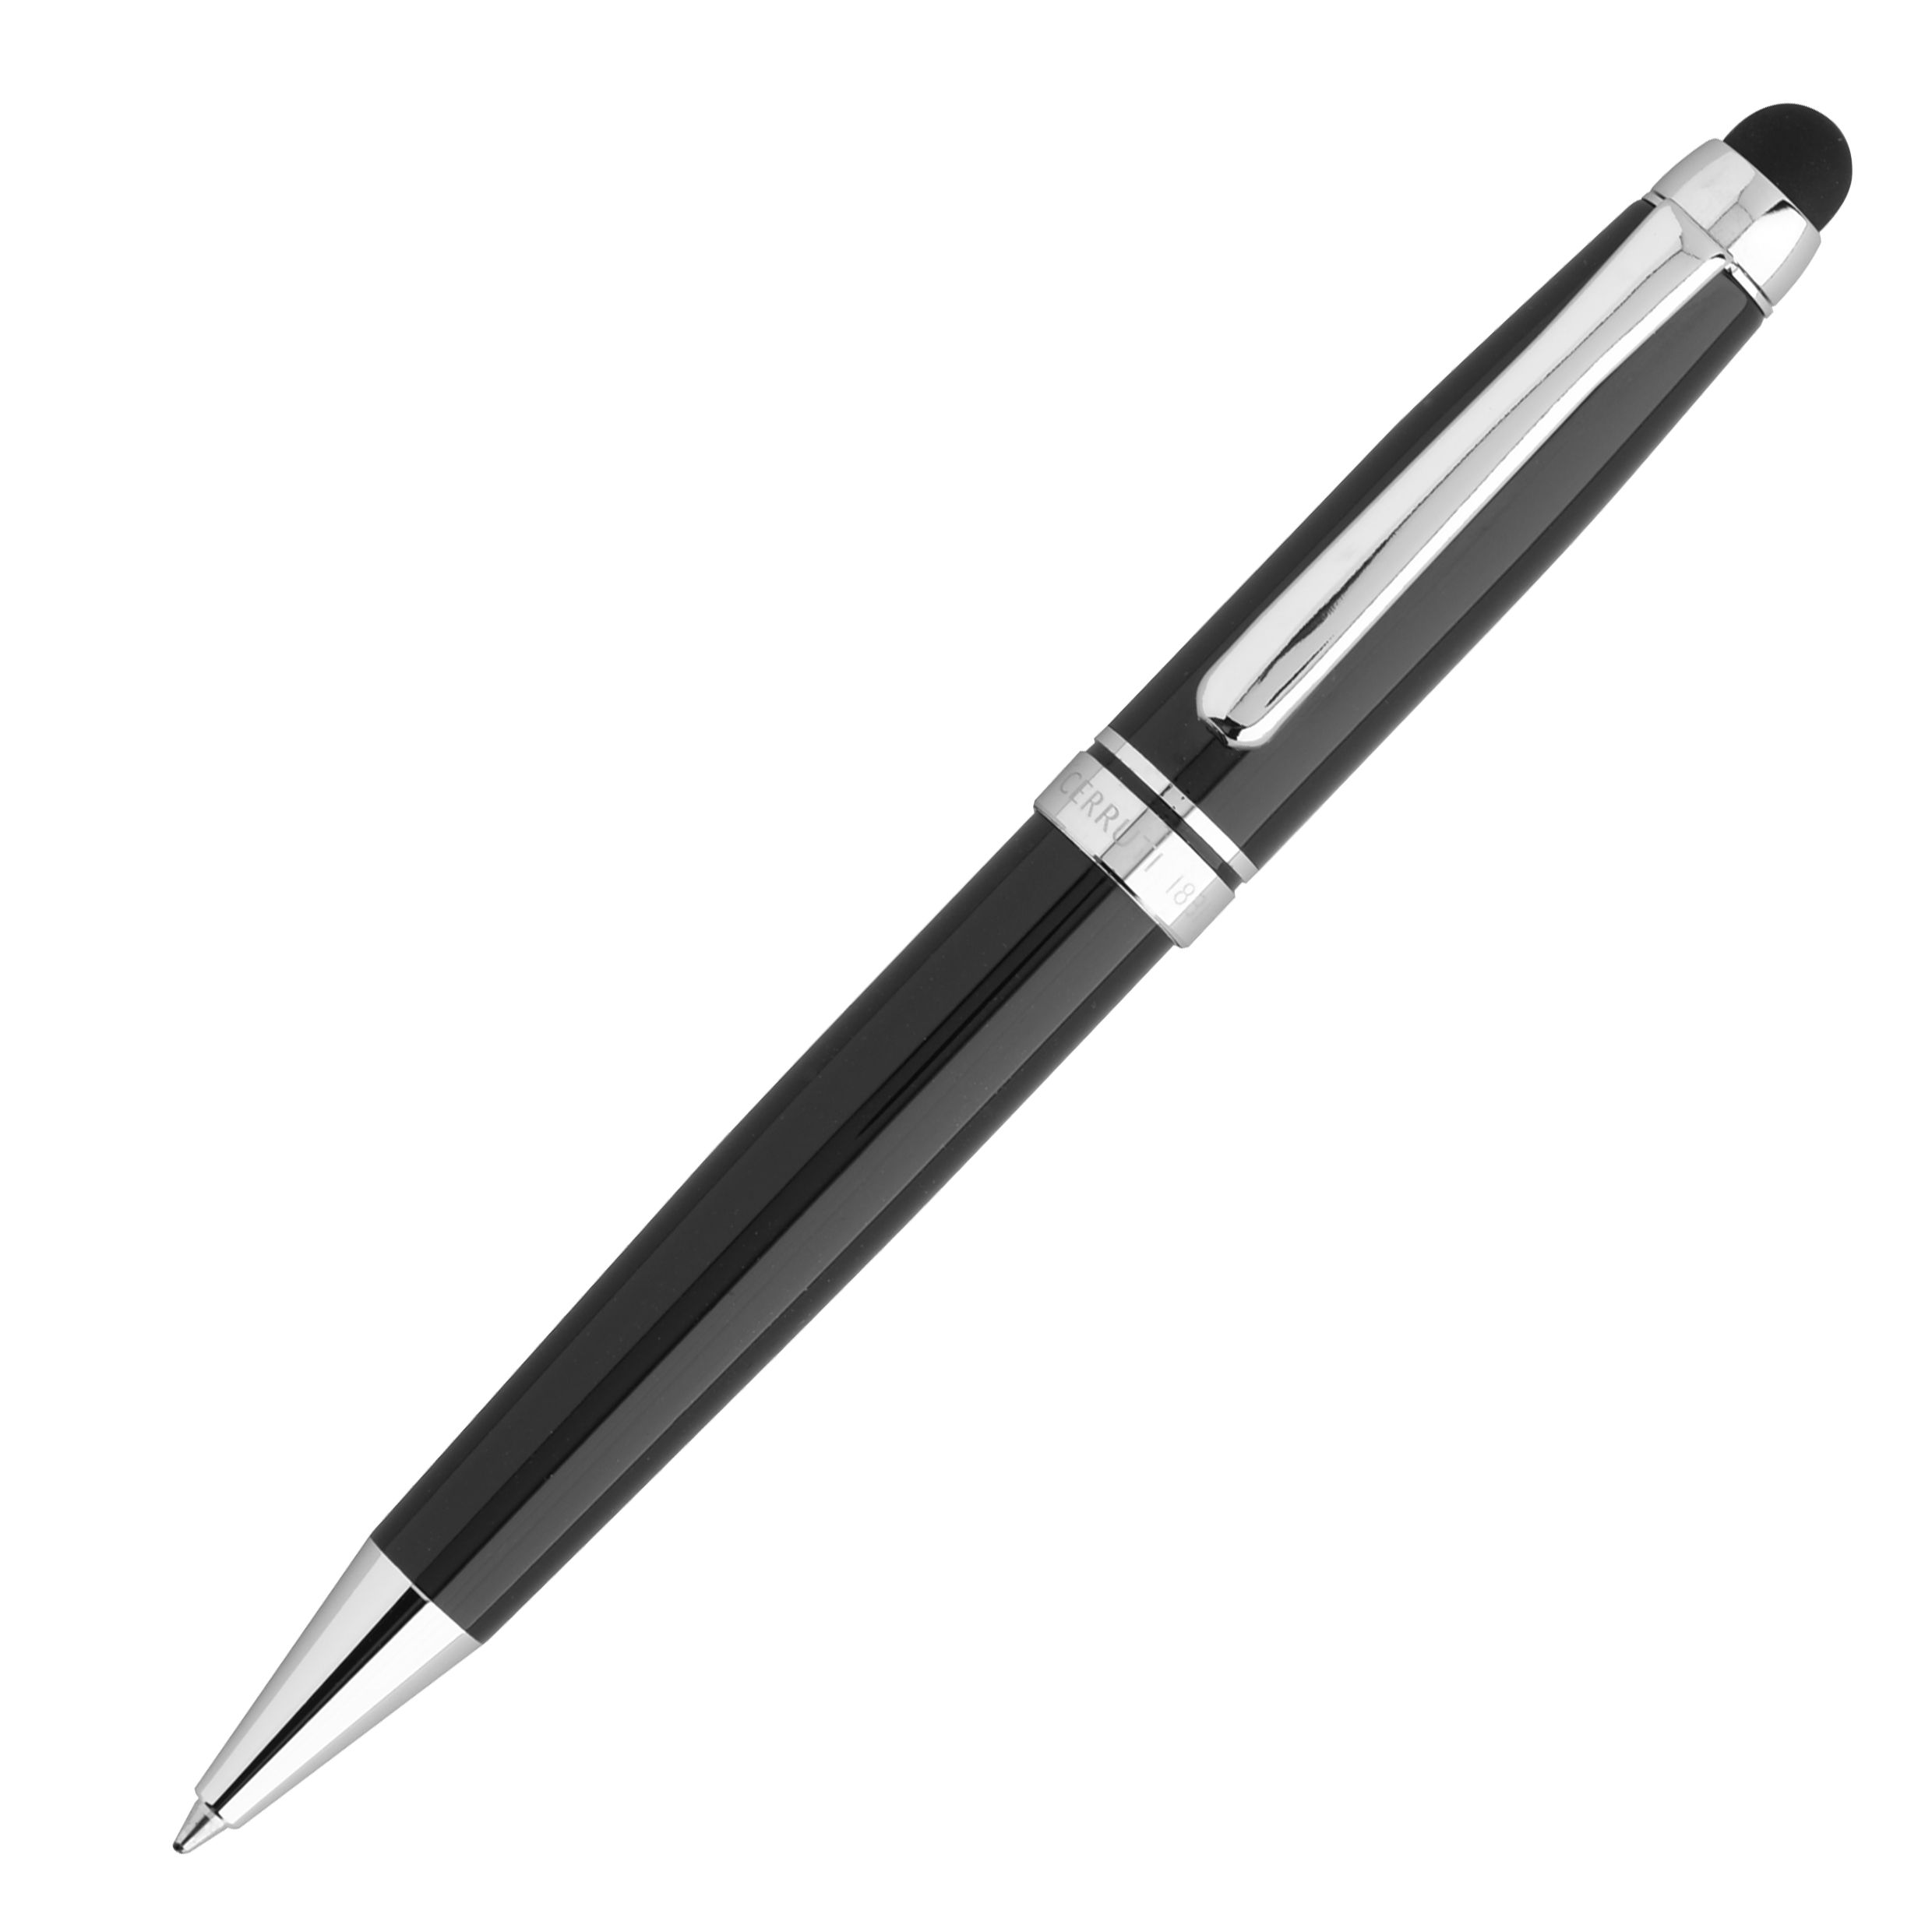 Cerruti 1881- NSS2564 Ballpoint pen Pad